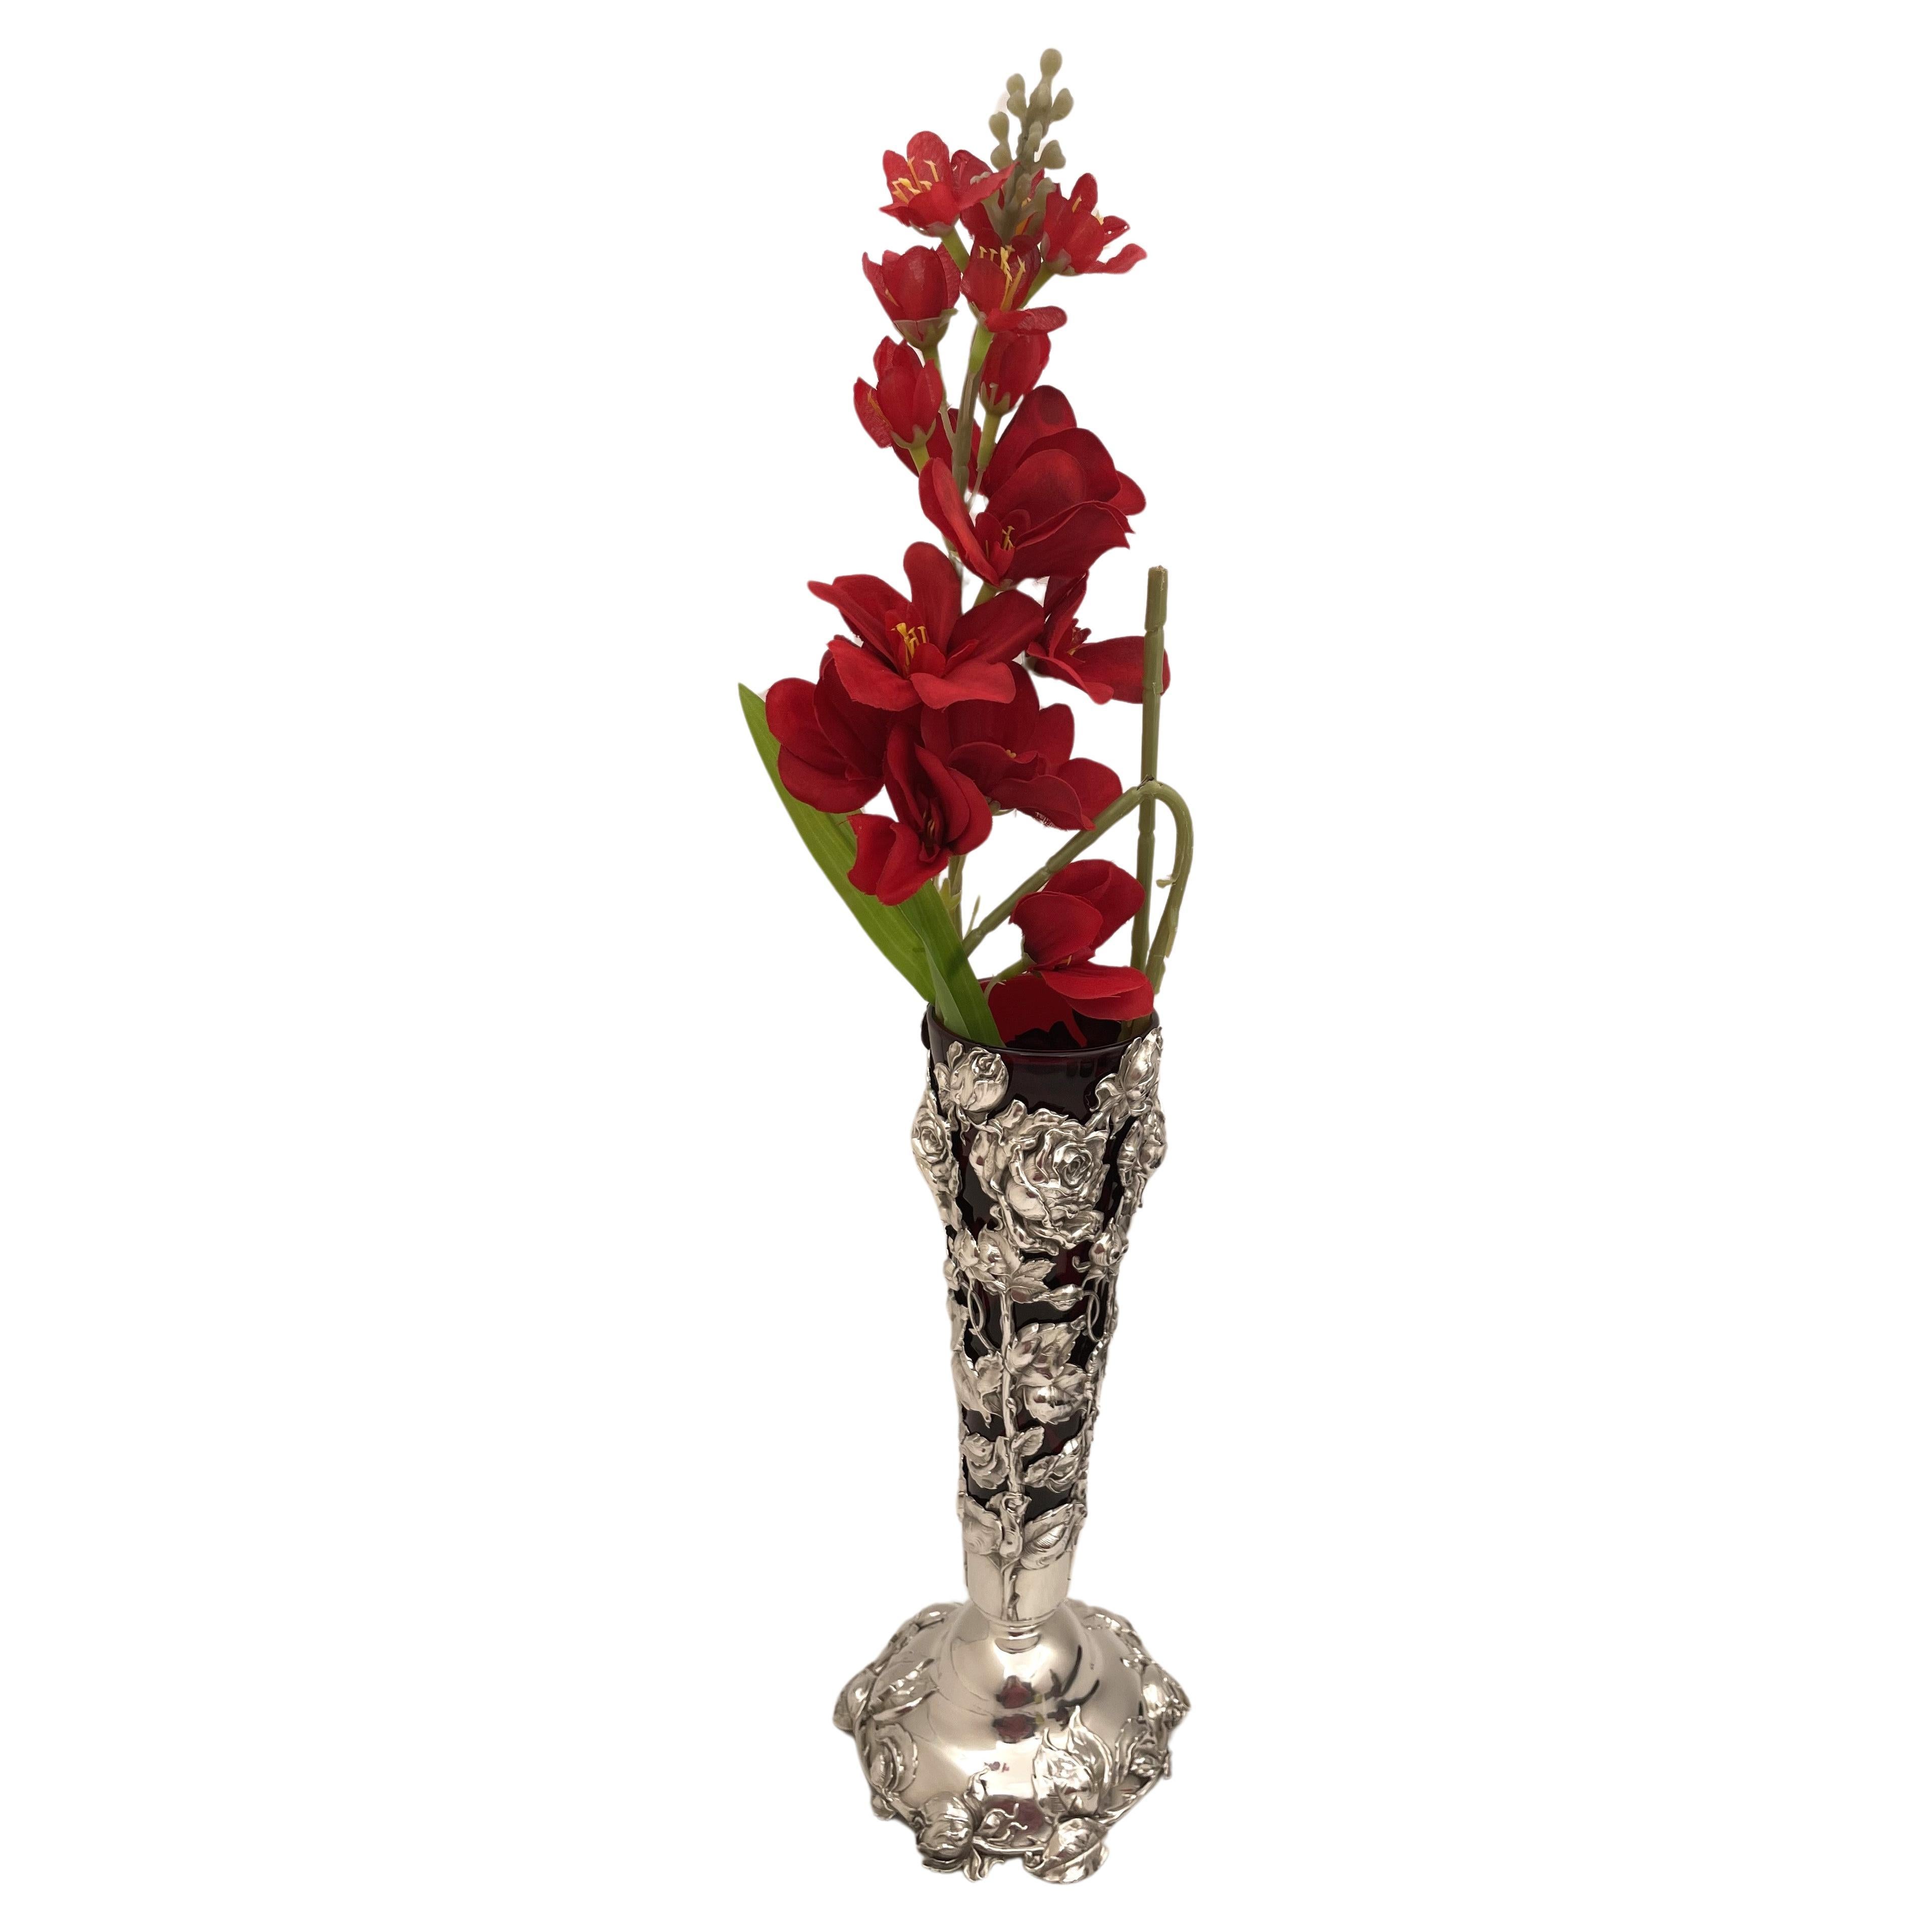  Gorham Sterling Silber Vase im Jugendstil mit dimensionalen Blumen im Angebot